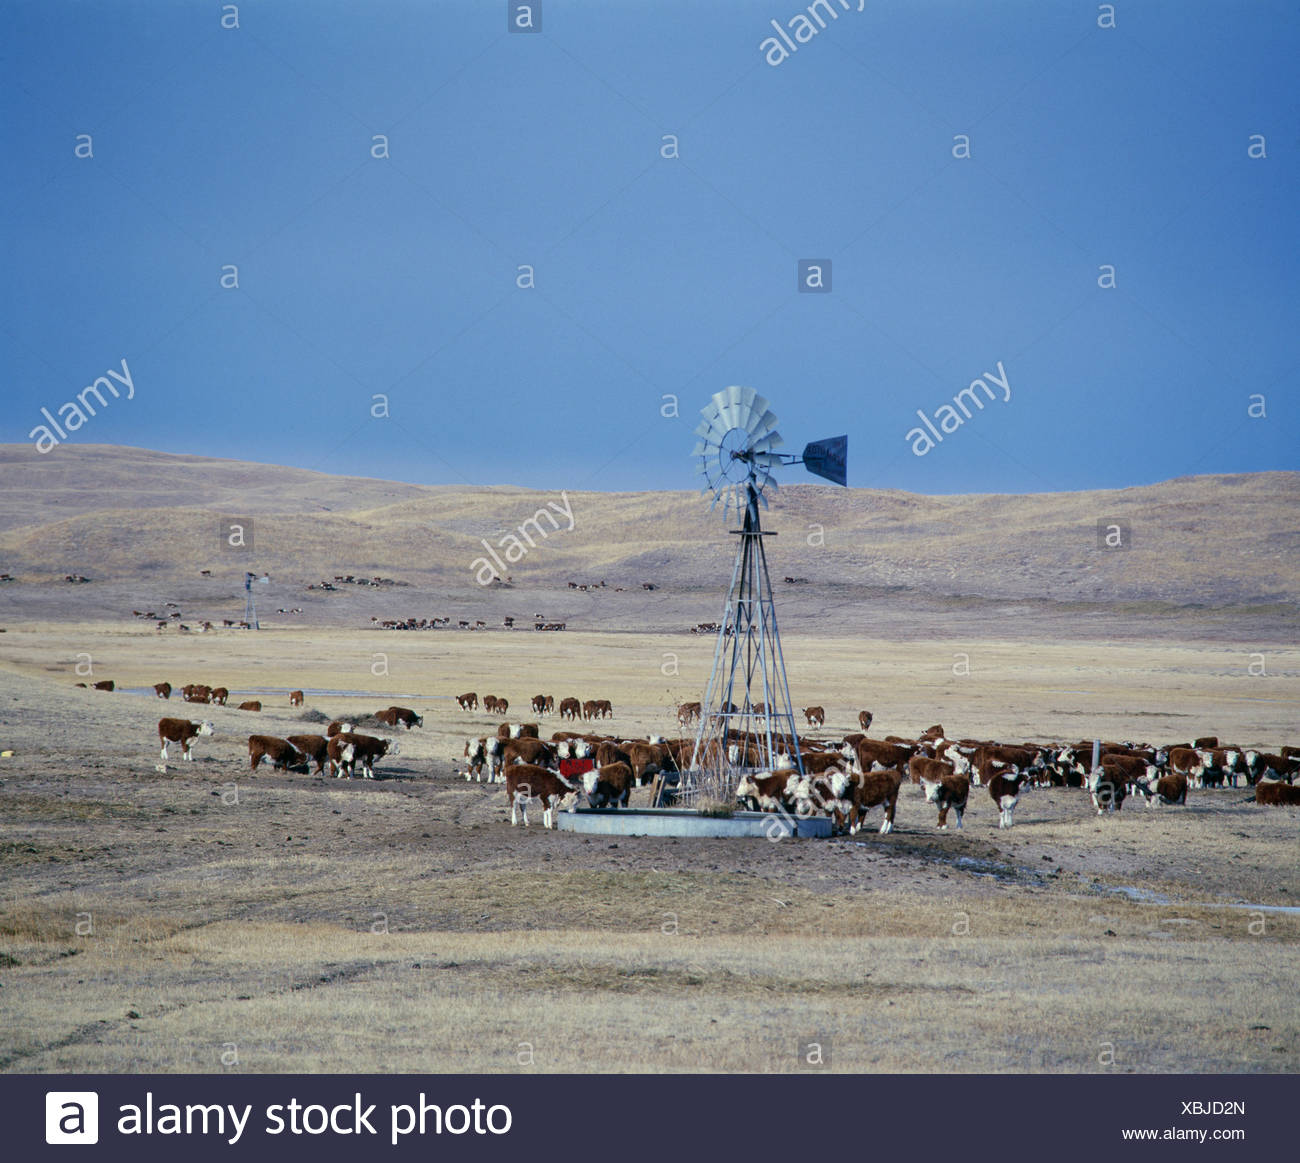 hereford-400-lb-calves-at-water-tank-by-windmill-XBJD2N.jpg